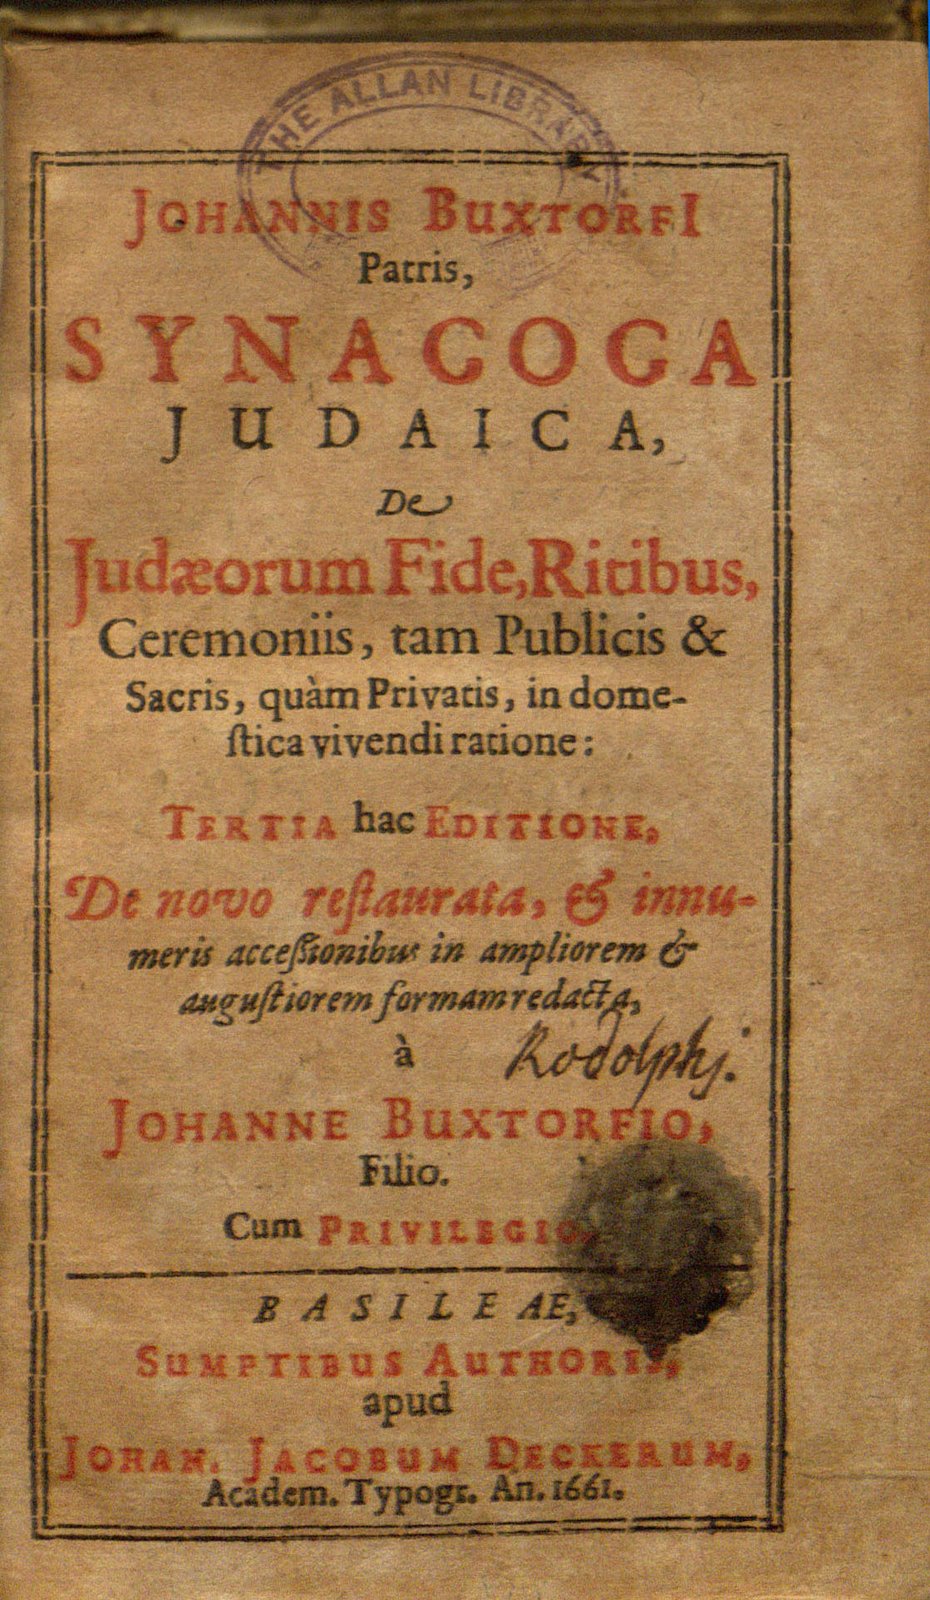 Title page of Synagoga Judaica by Johannis Buxtorfi